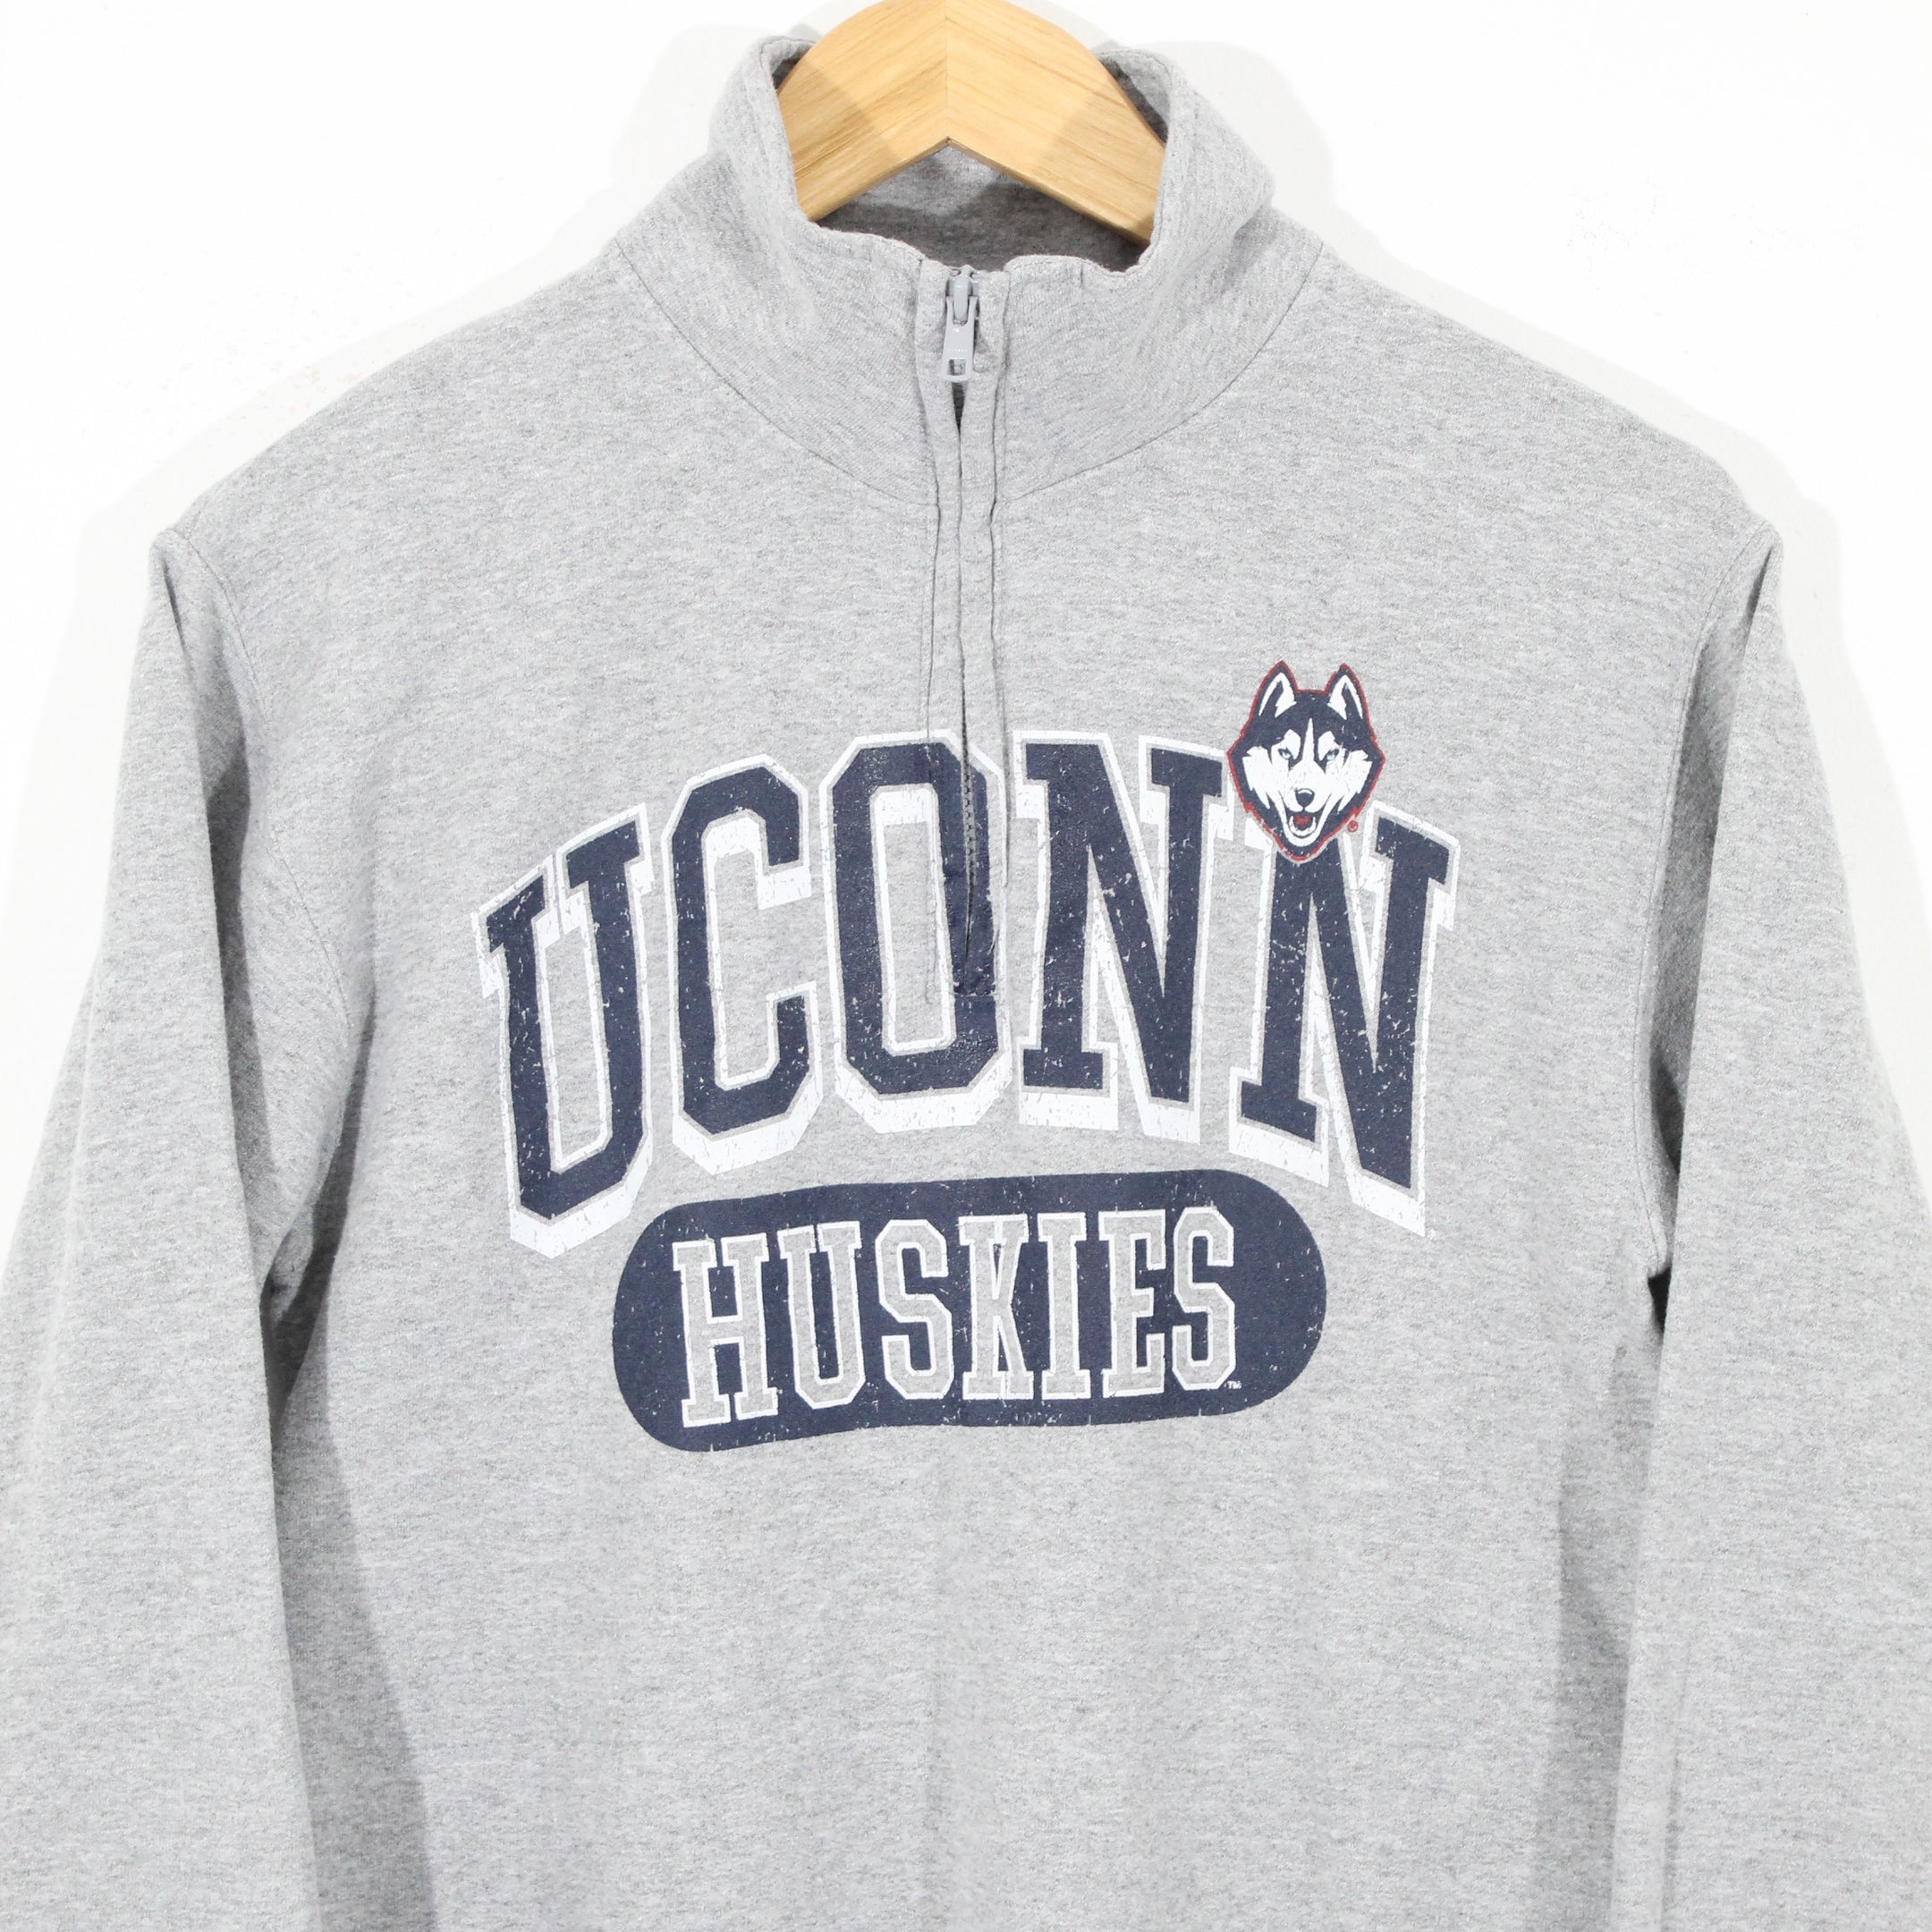 Champion Uconn Huskies Quarter Zip Sweatshirt (S)